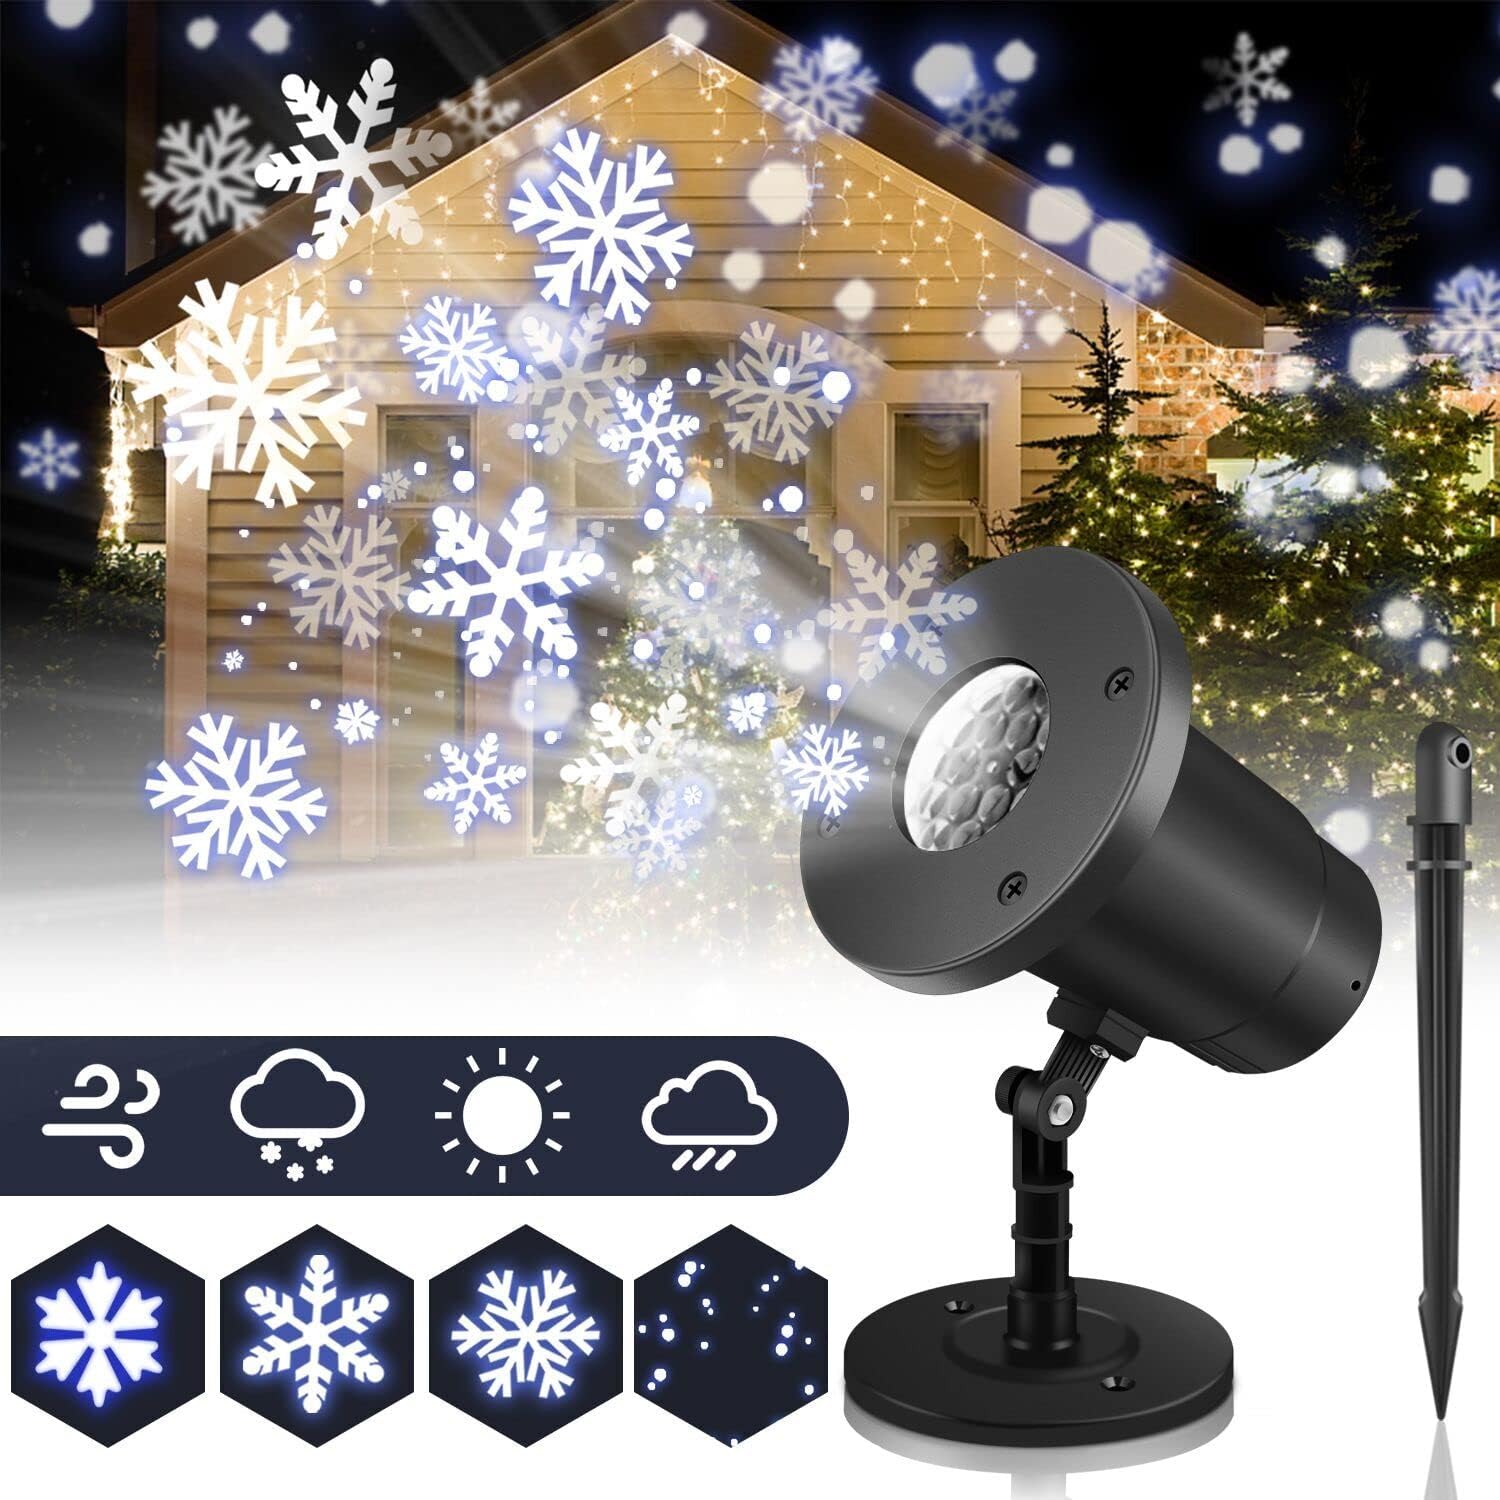 Liwarace Christmas Snowflake Projector Lights Outdoor -  LED Snowflake Lights - Waterproof Plug in Xmas Lights - Indoor/Outdoor Christma